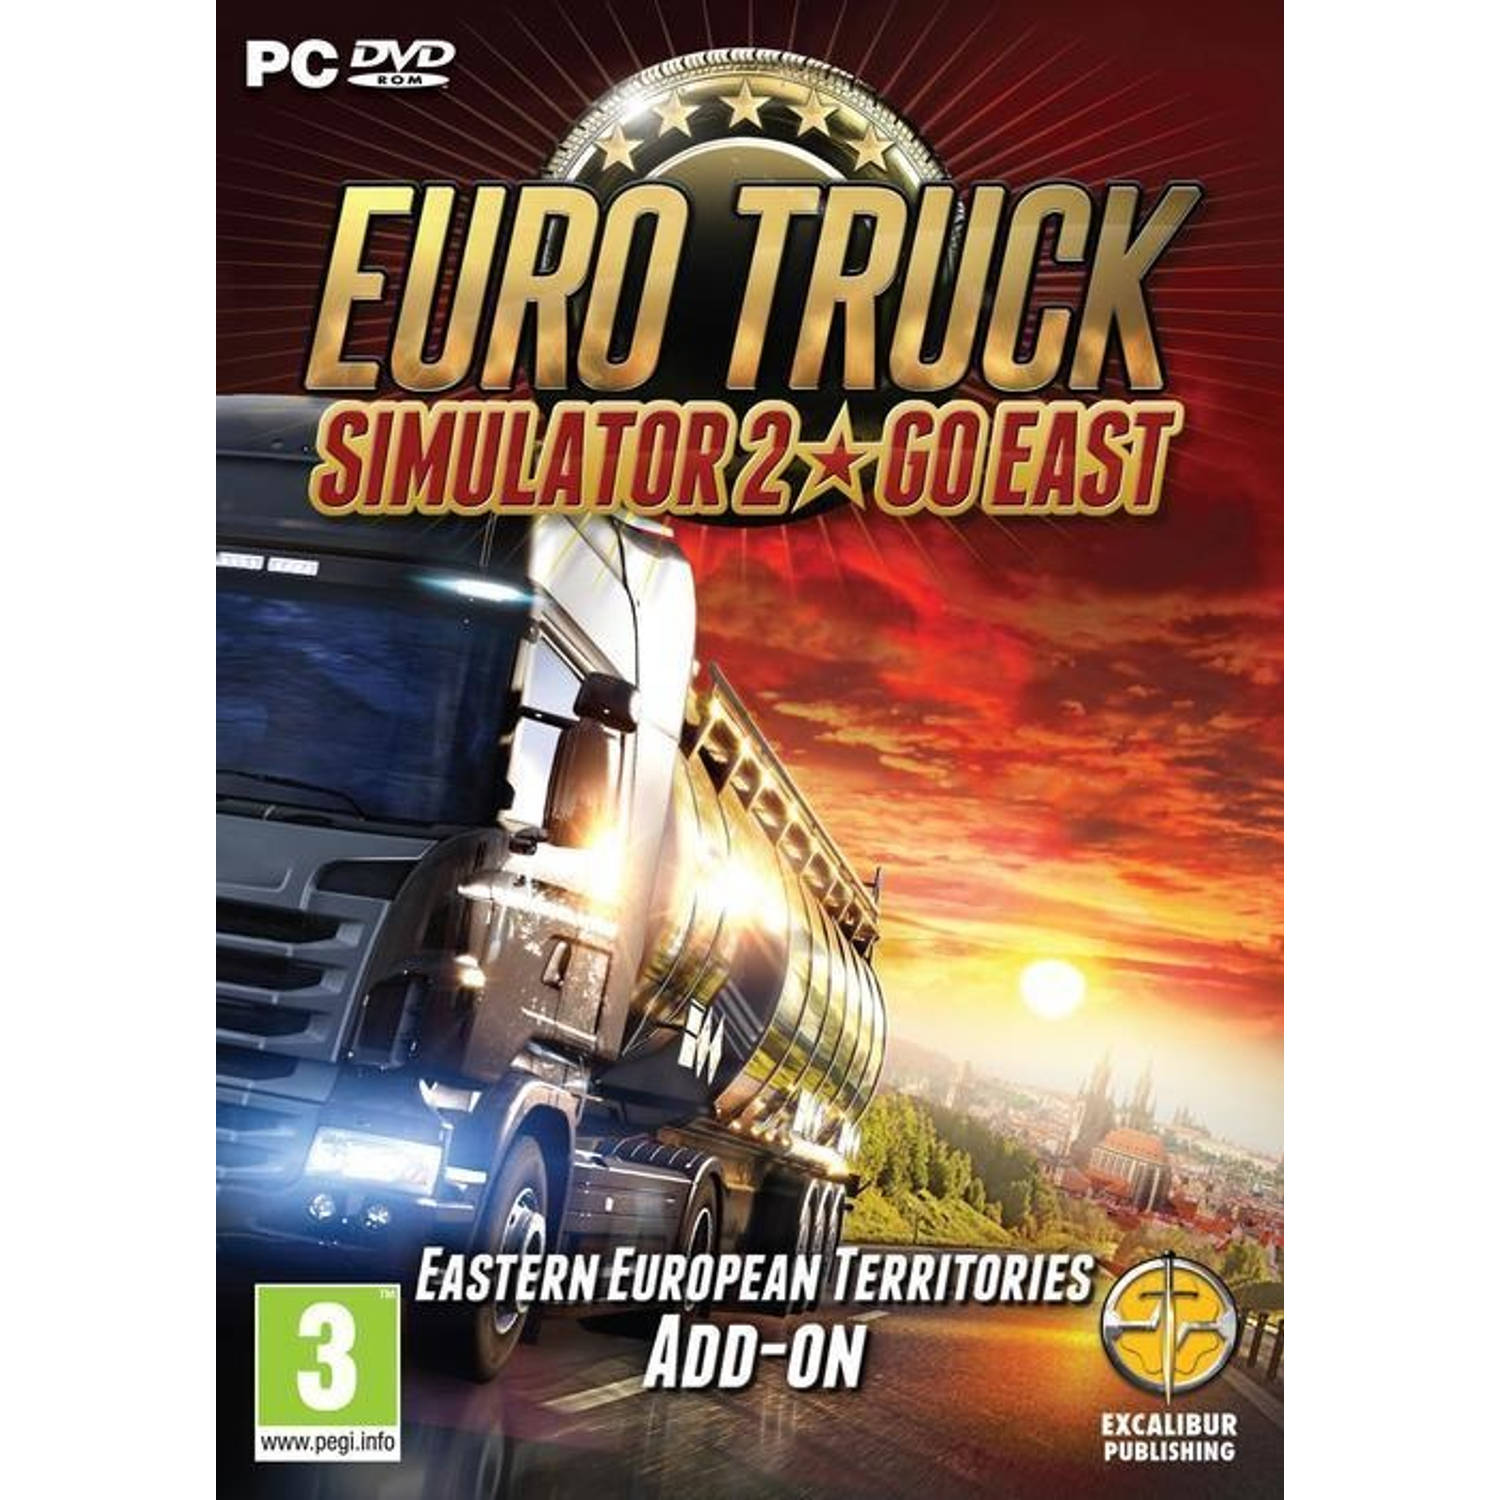 PC DVD Euro Truck Simulator 2 Go East Add-on